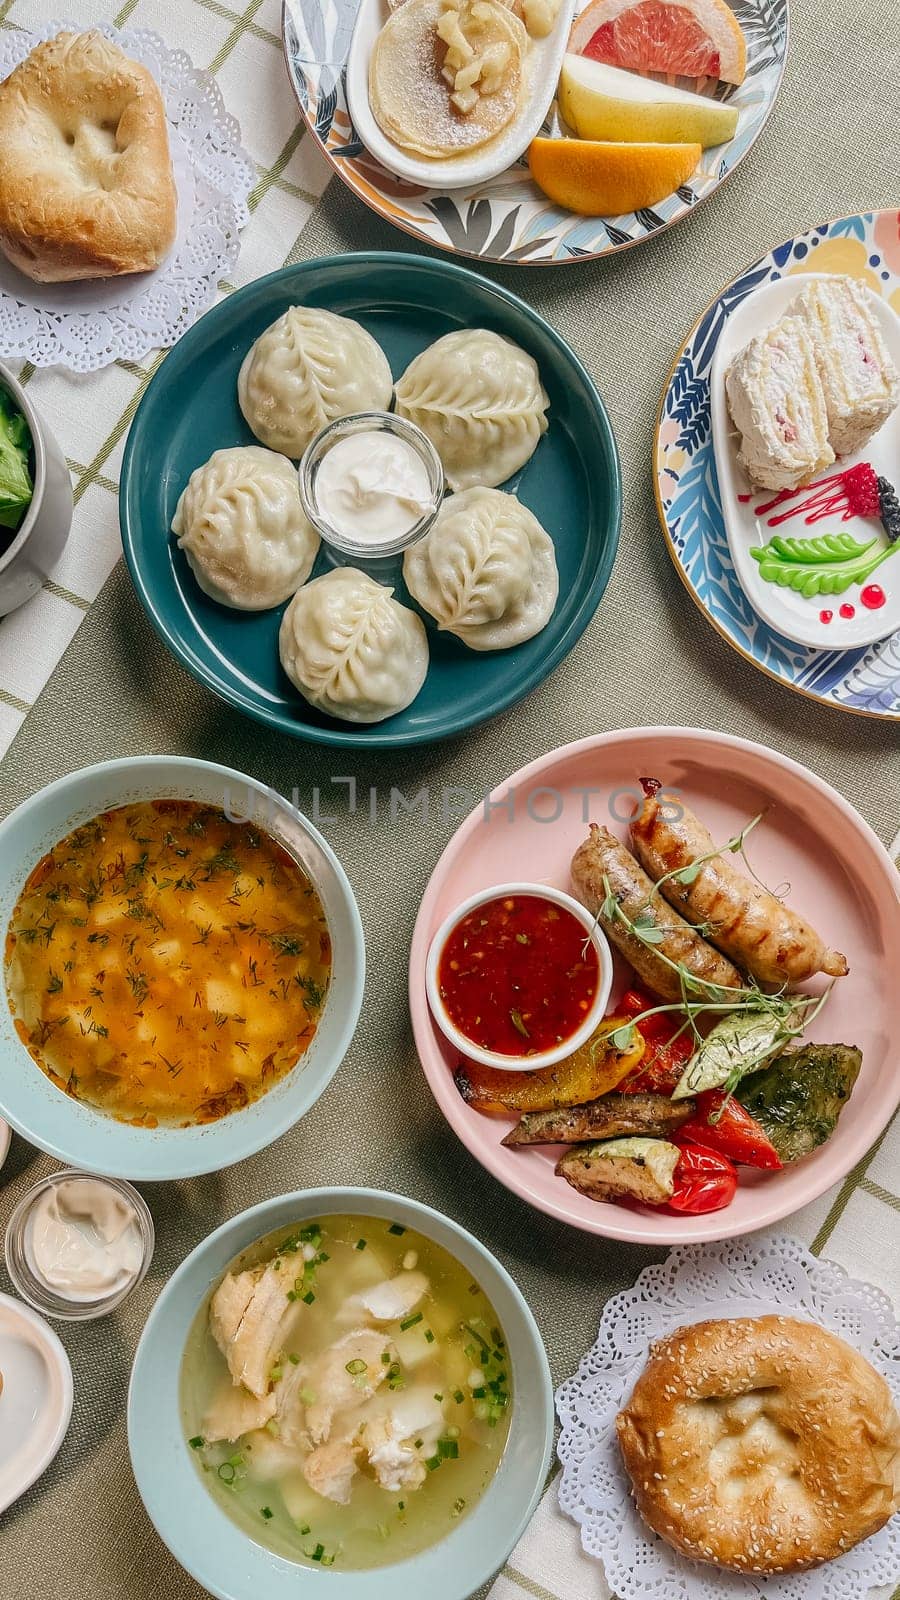 Uzbek Food, Dumplings, Soup, Salad, and Pastries on a Table by Pukhovskiy